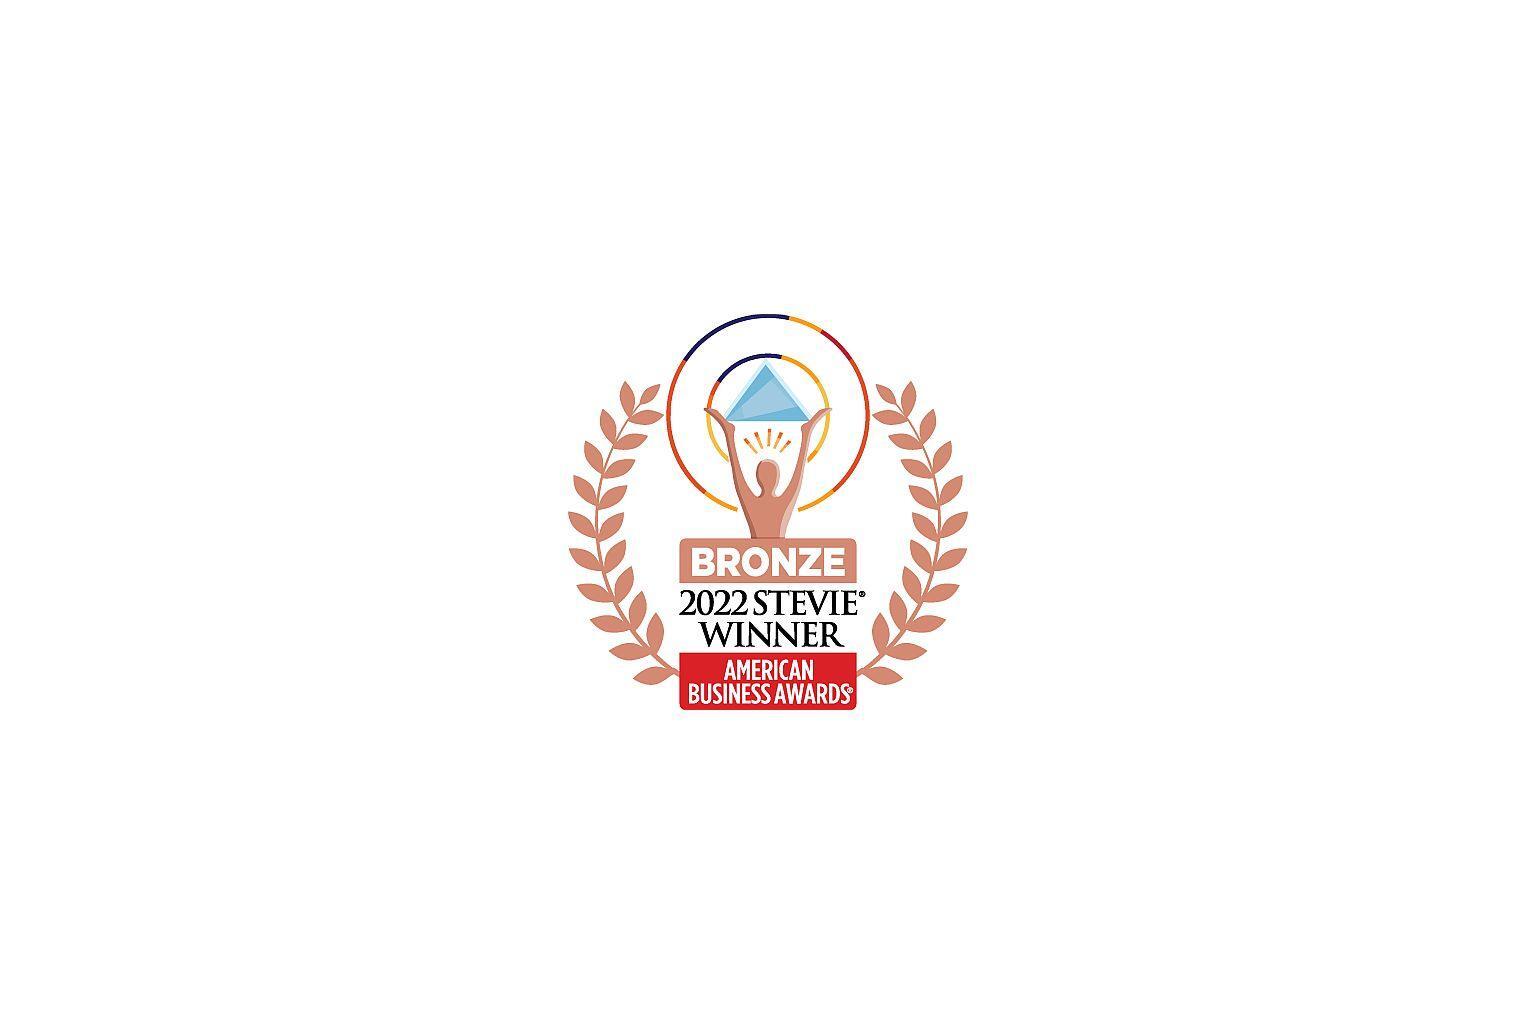 CT Corporation wins bronze American Business Award